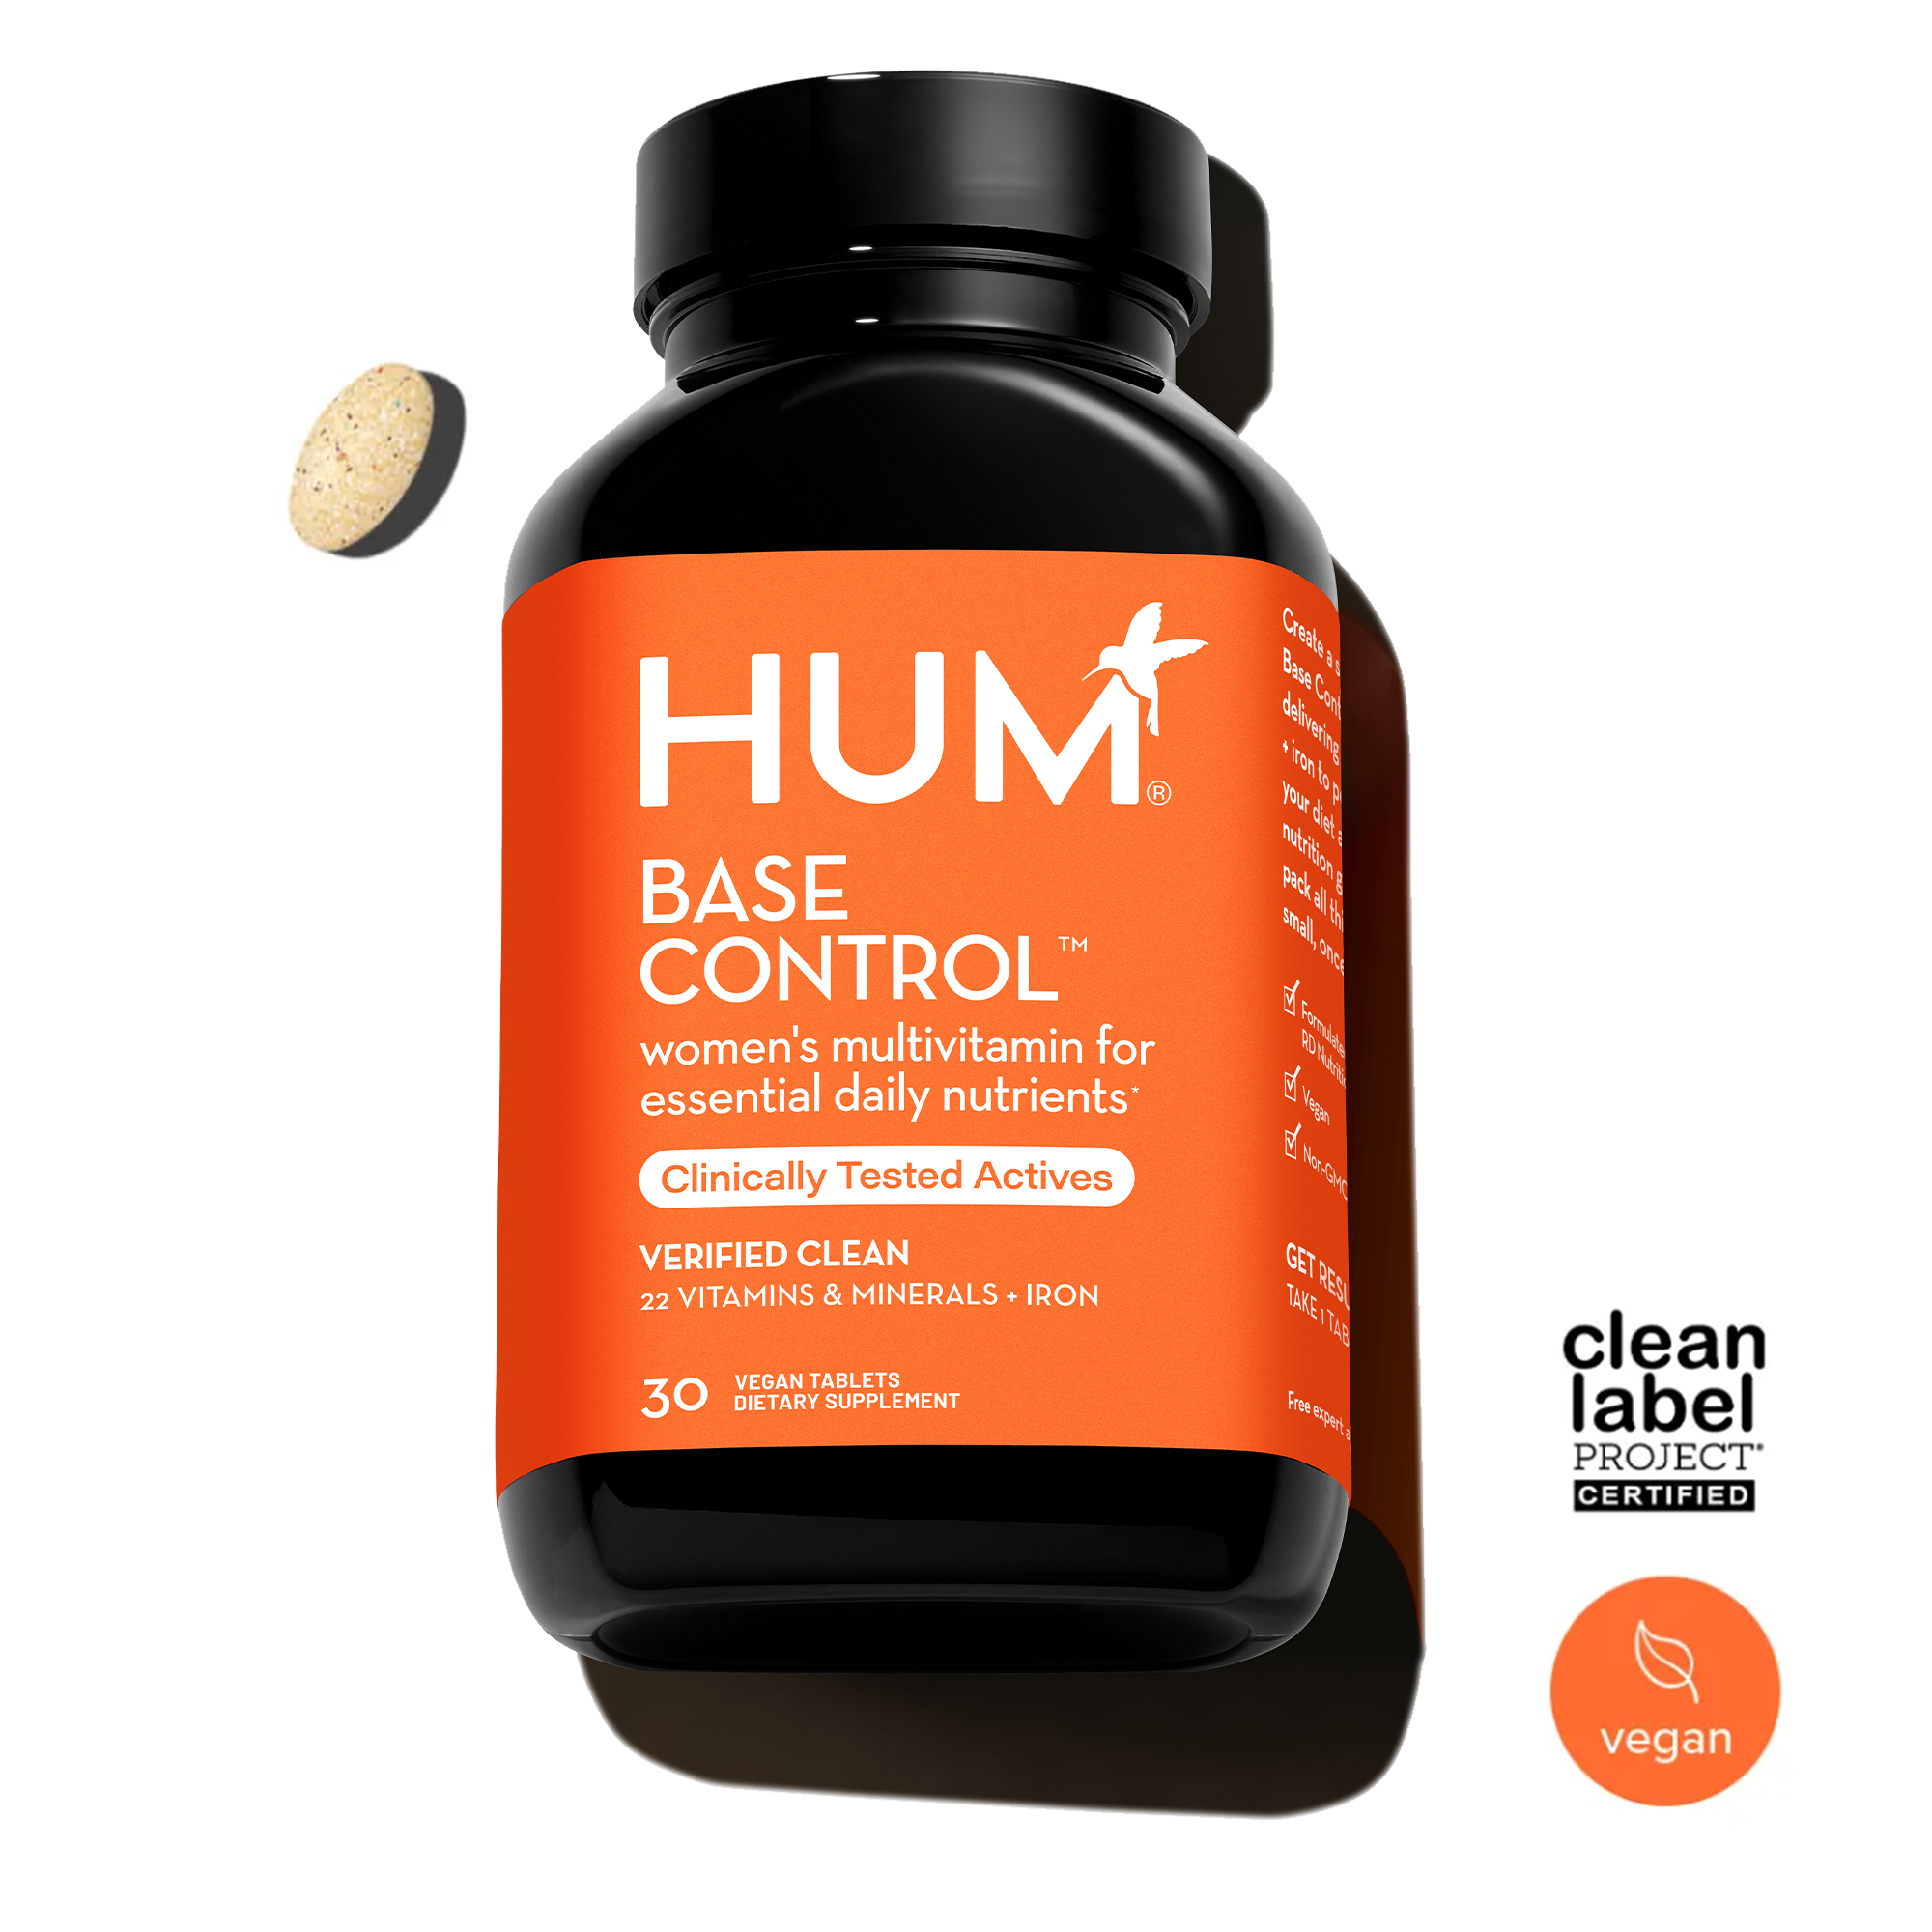  HUM Base Control - Daily Women's Multivitamin